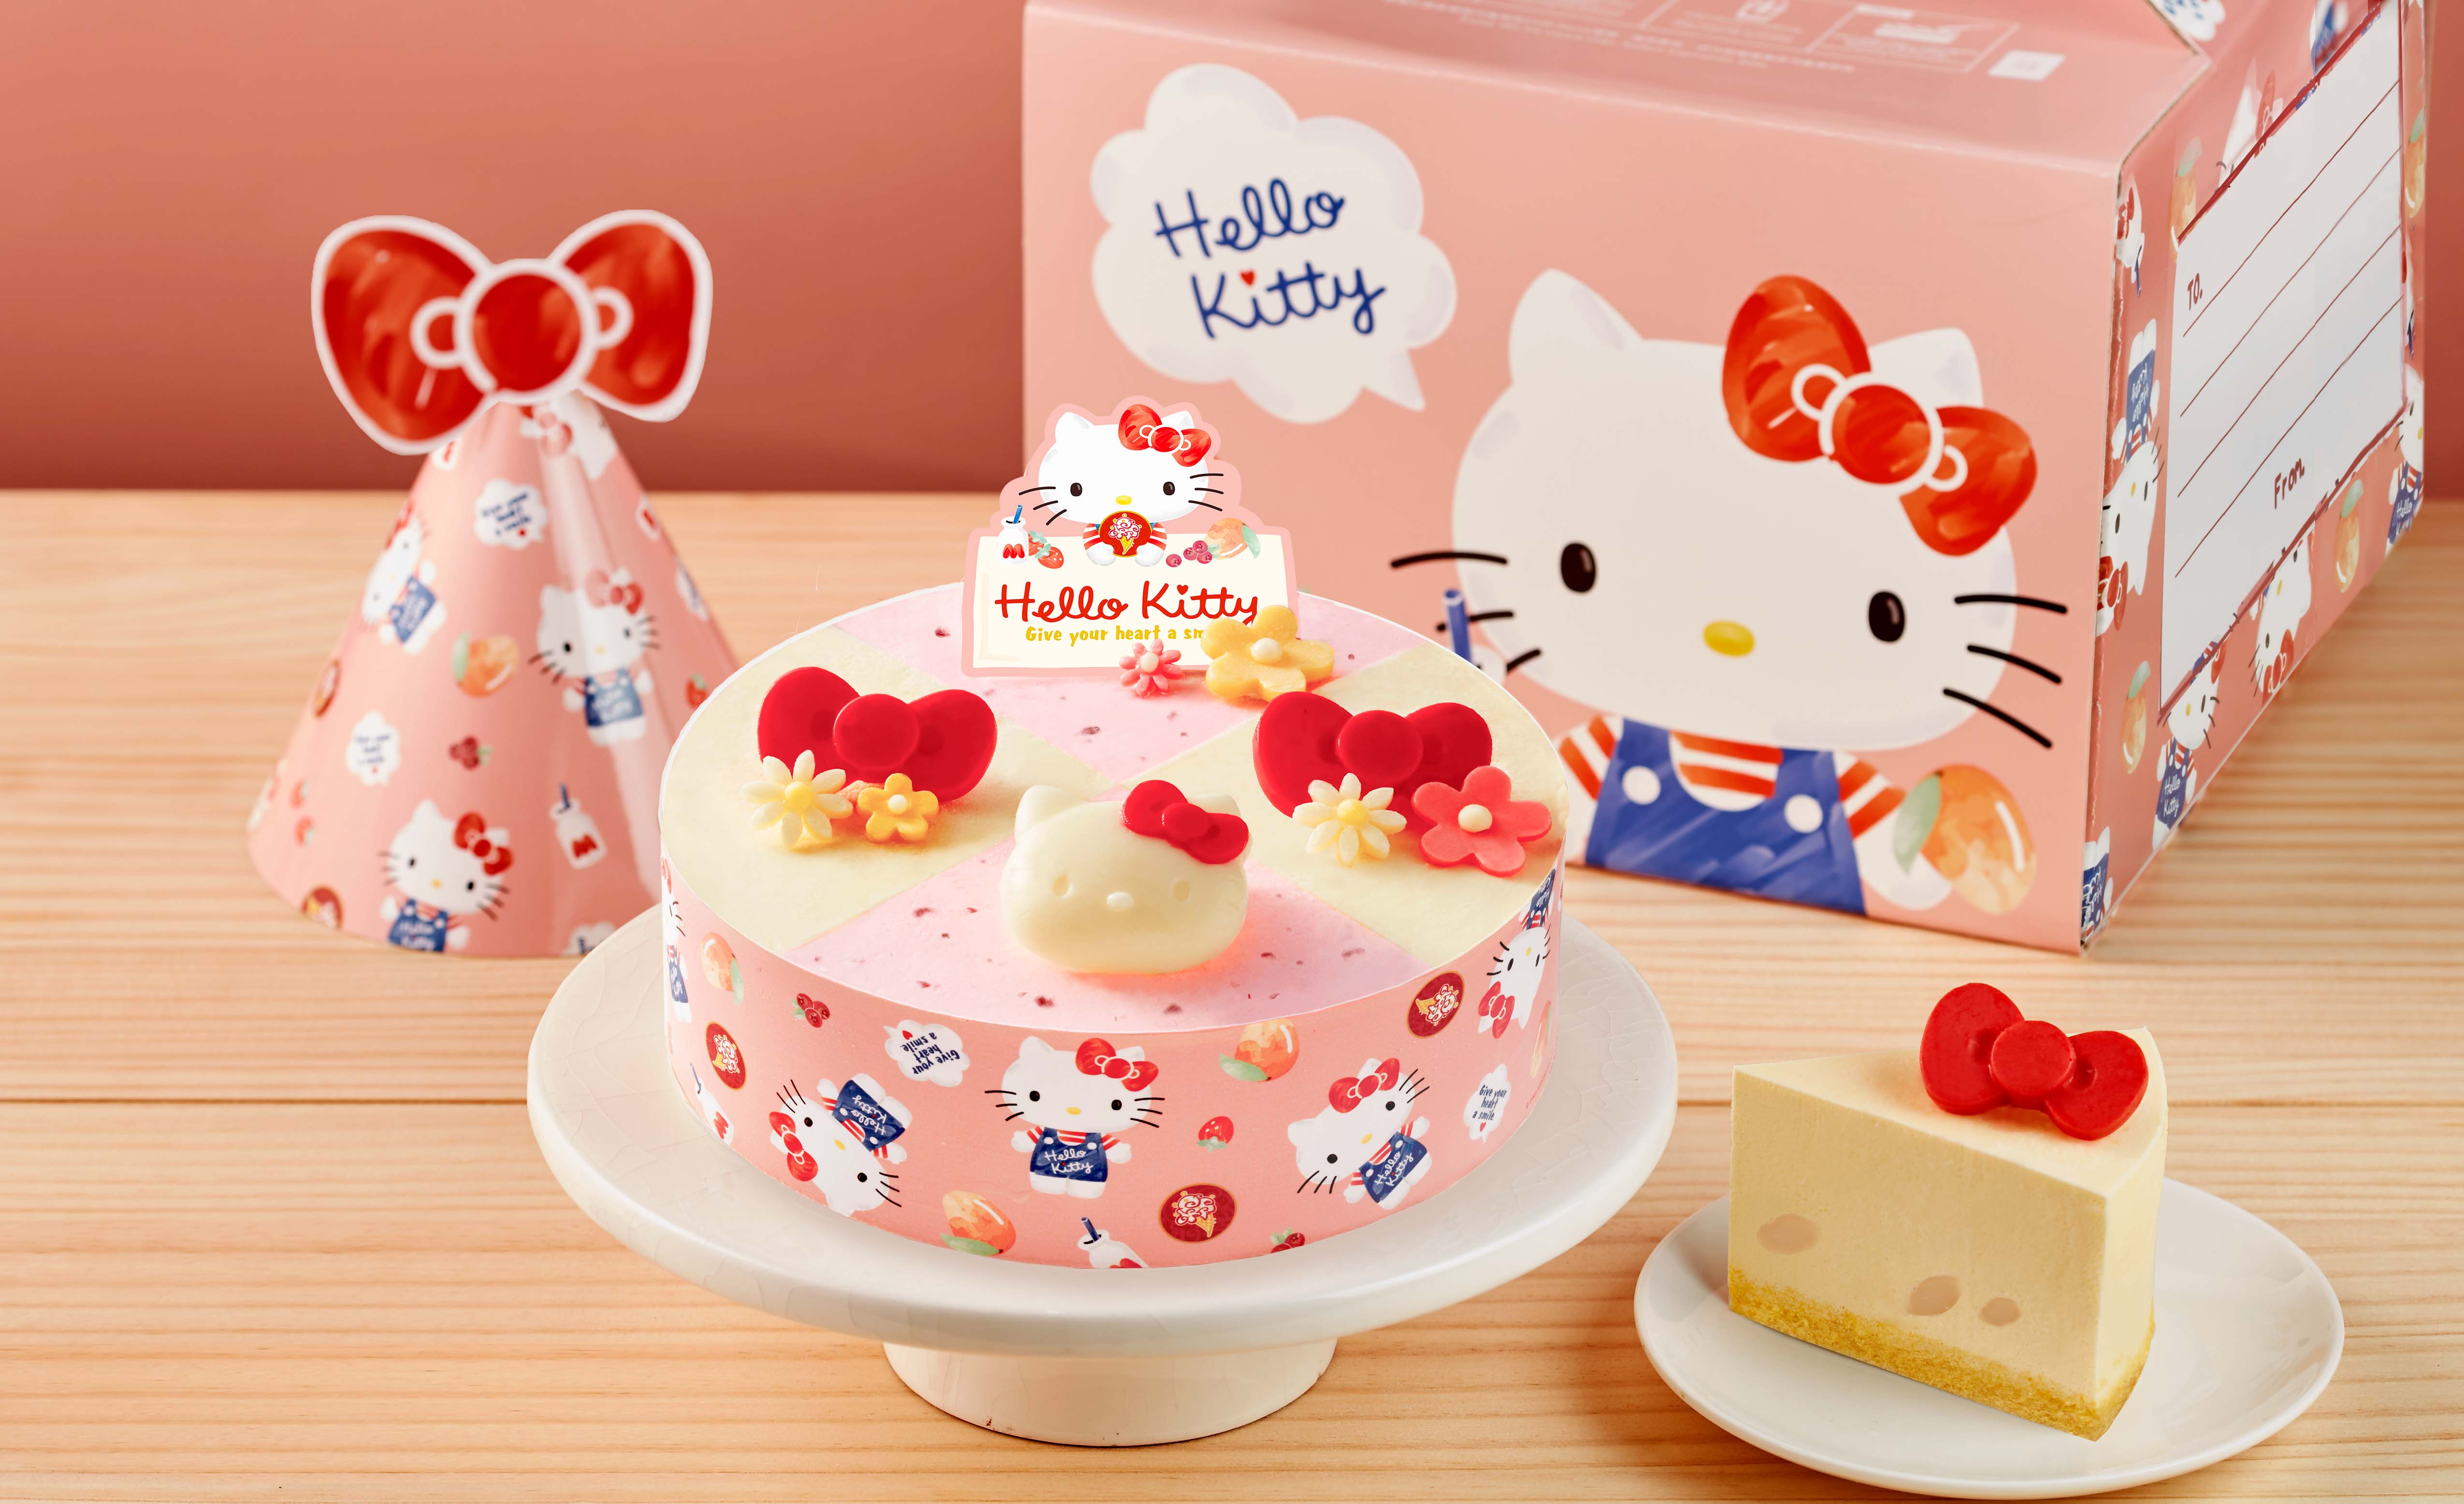 Hello kitty草莓蛋糕+果醬+麻辣火鍋